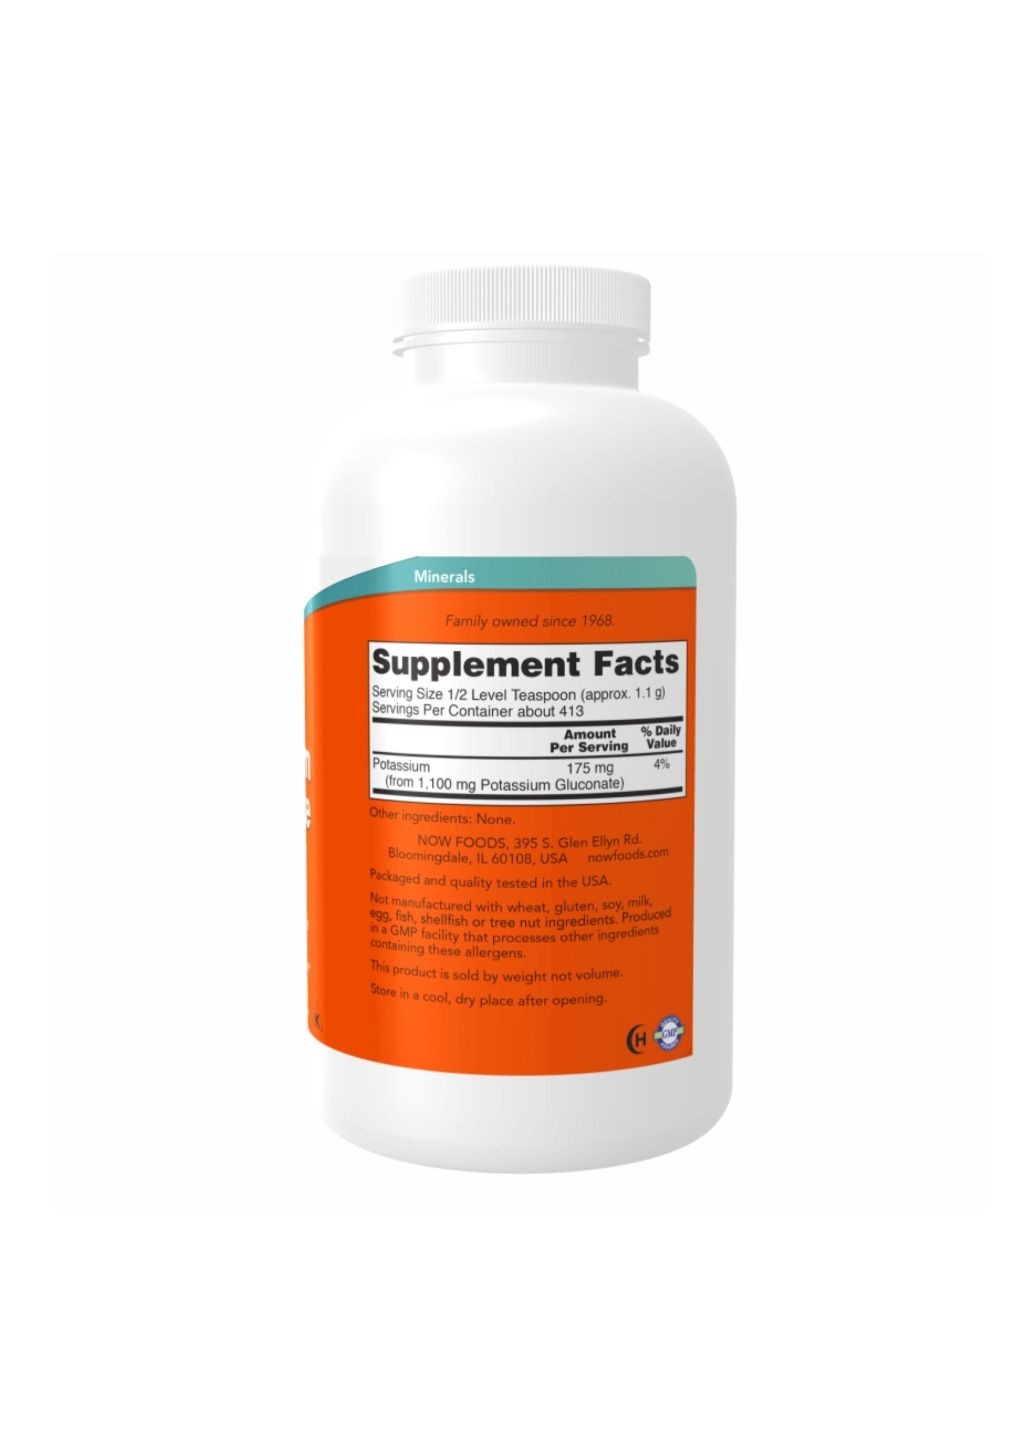 Калій Potassium Gluconate Pure Powder - 454g Now Foods (280899562)